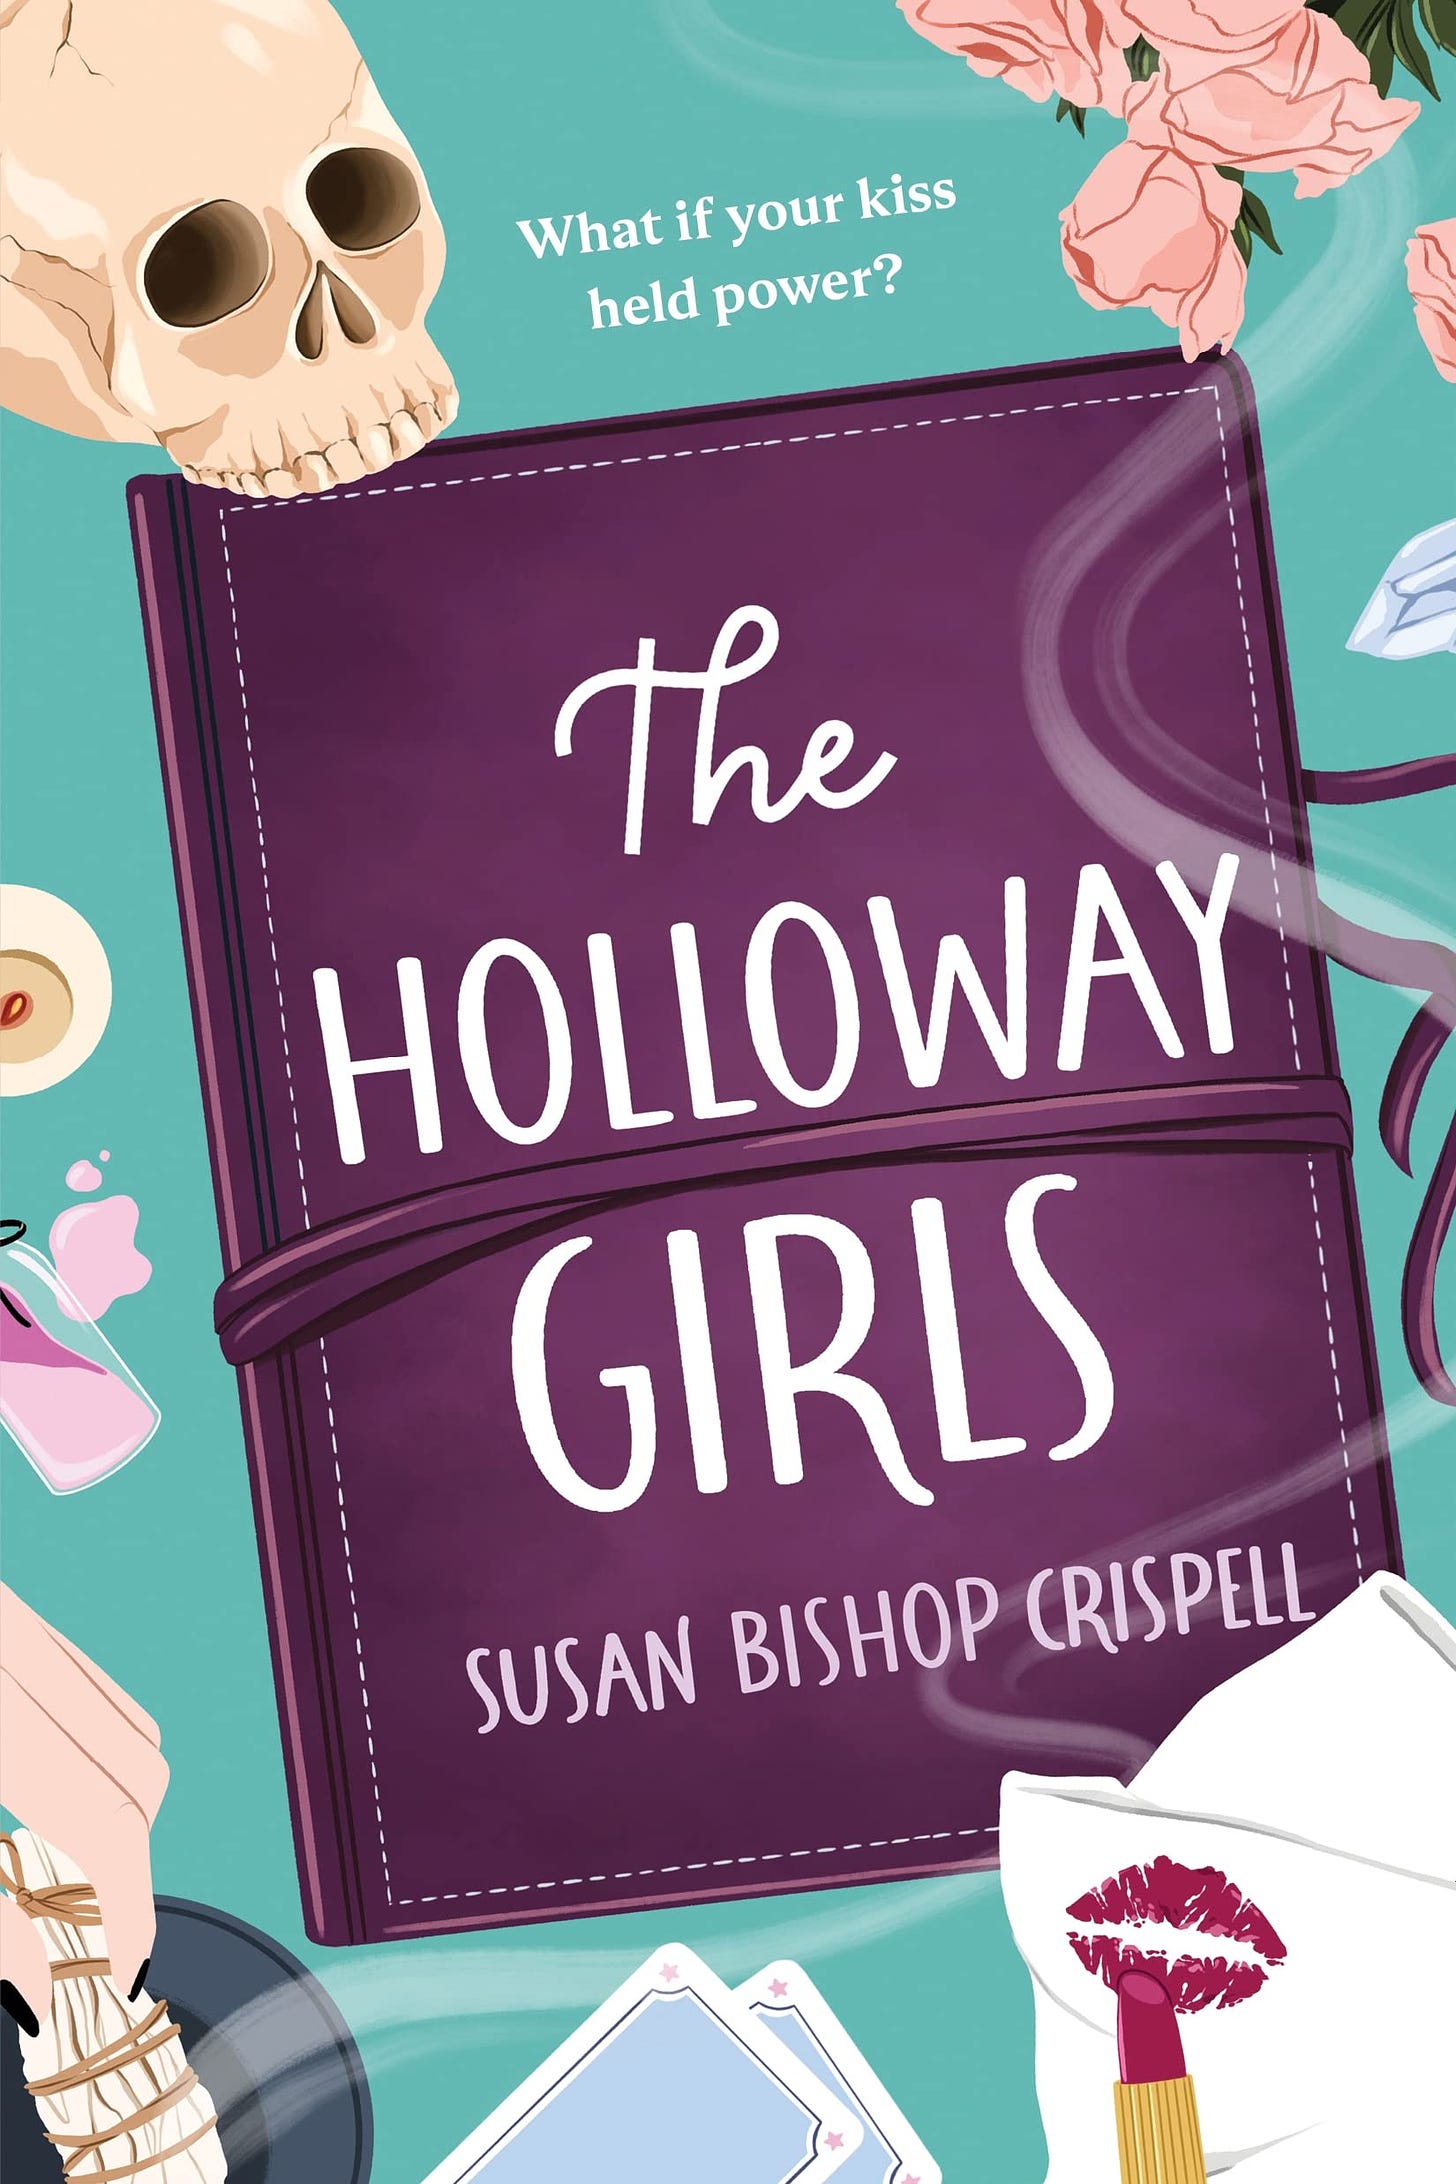 Amazon.com: The Holloway Girls: 9781728247144: Bishop Crispell, Susan: Books